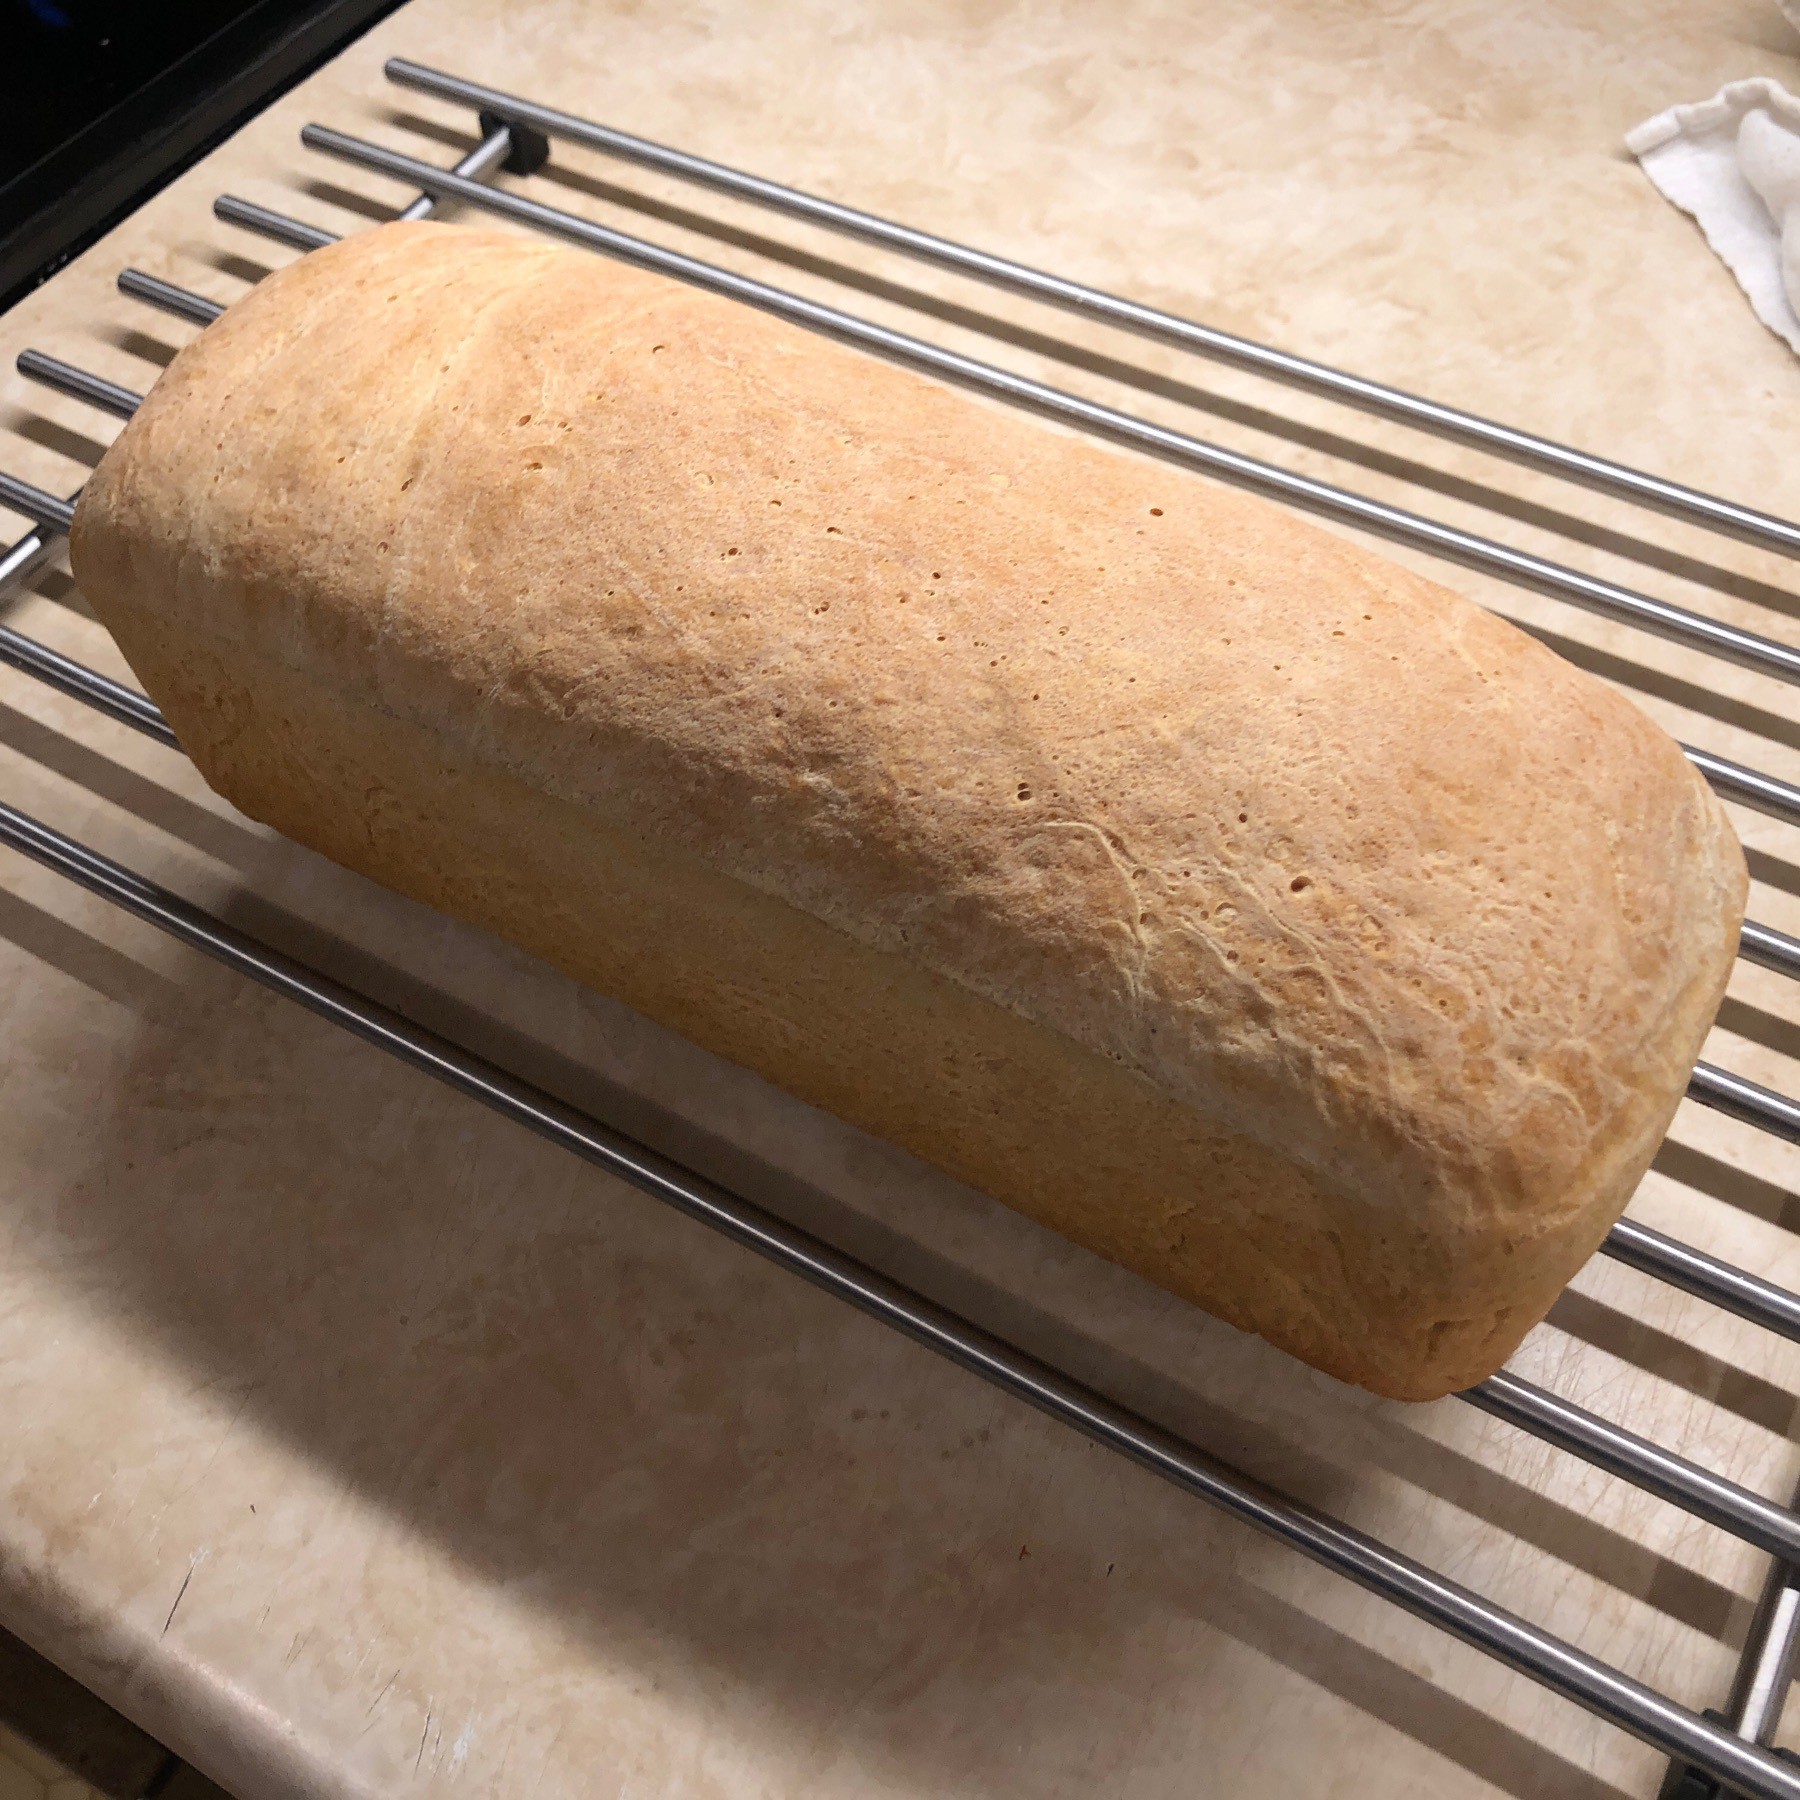 Loaf of bread cooling.